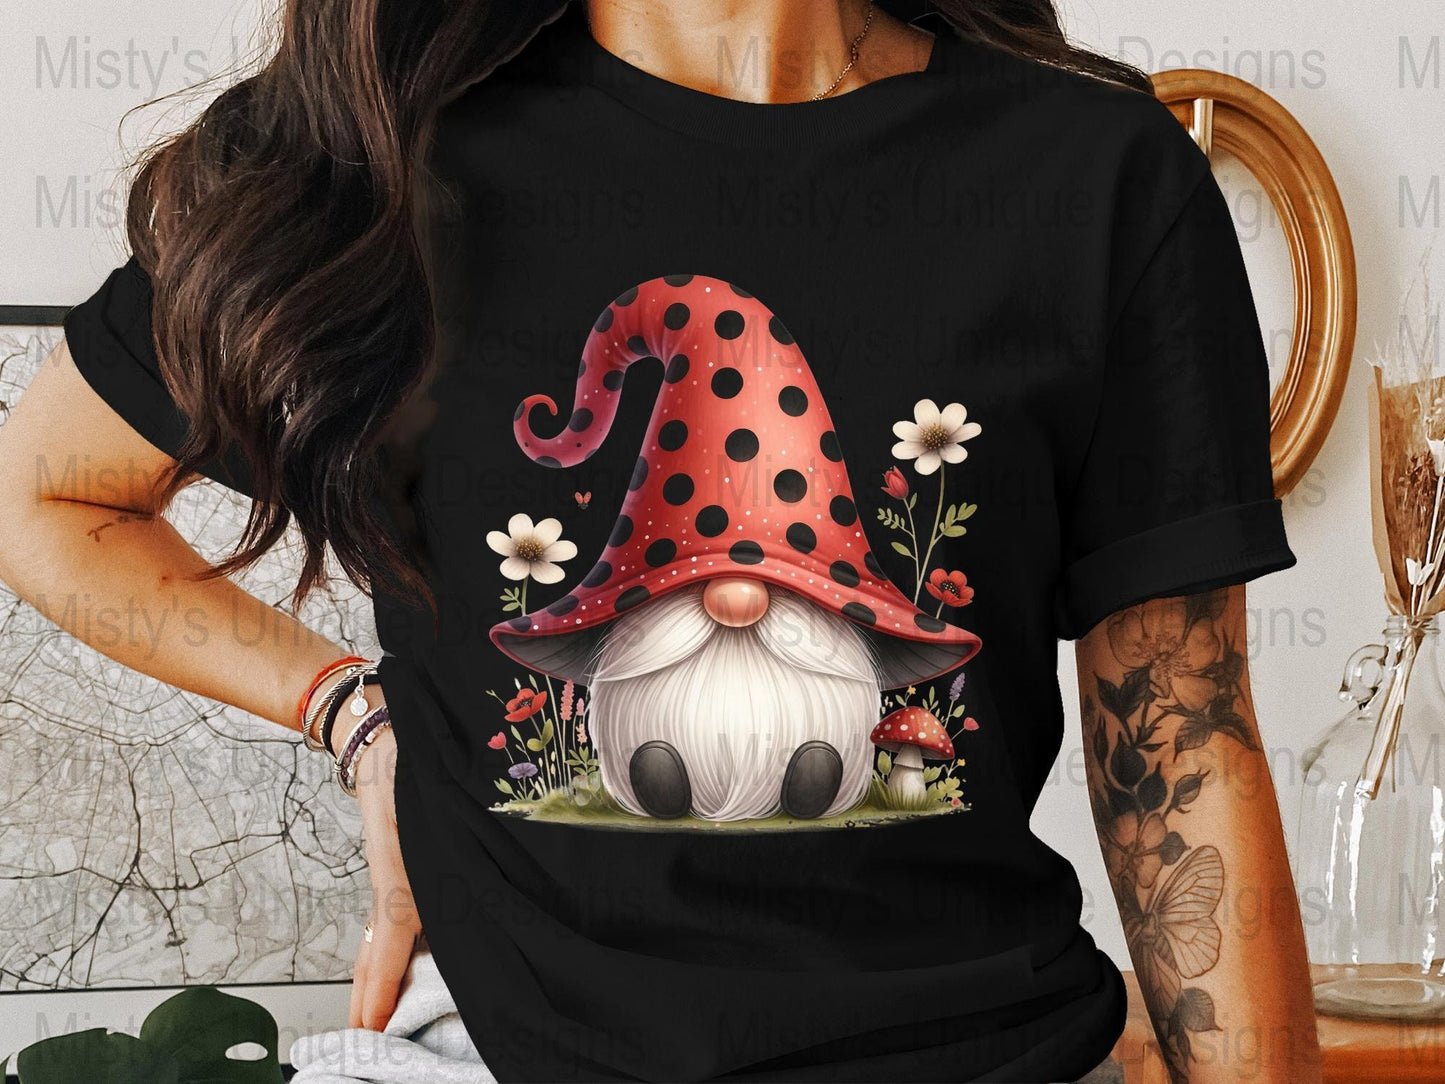 Cute Gnome Clipart, Red Polka Dot Hat, Digital Download, Fantasy Graphics, PNG Image, Scrapbooking, Crafting, Printable Art